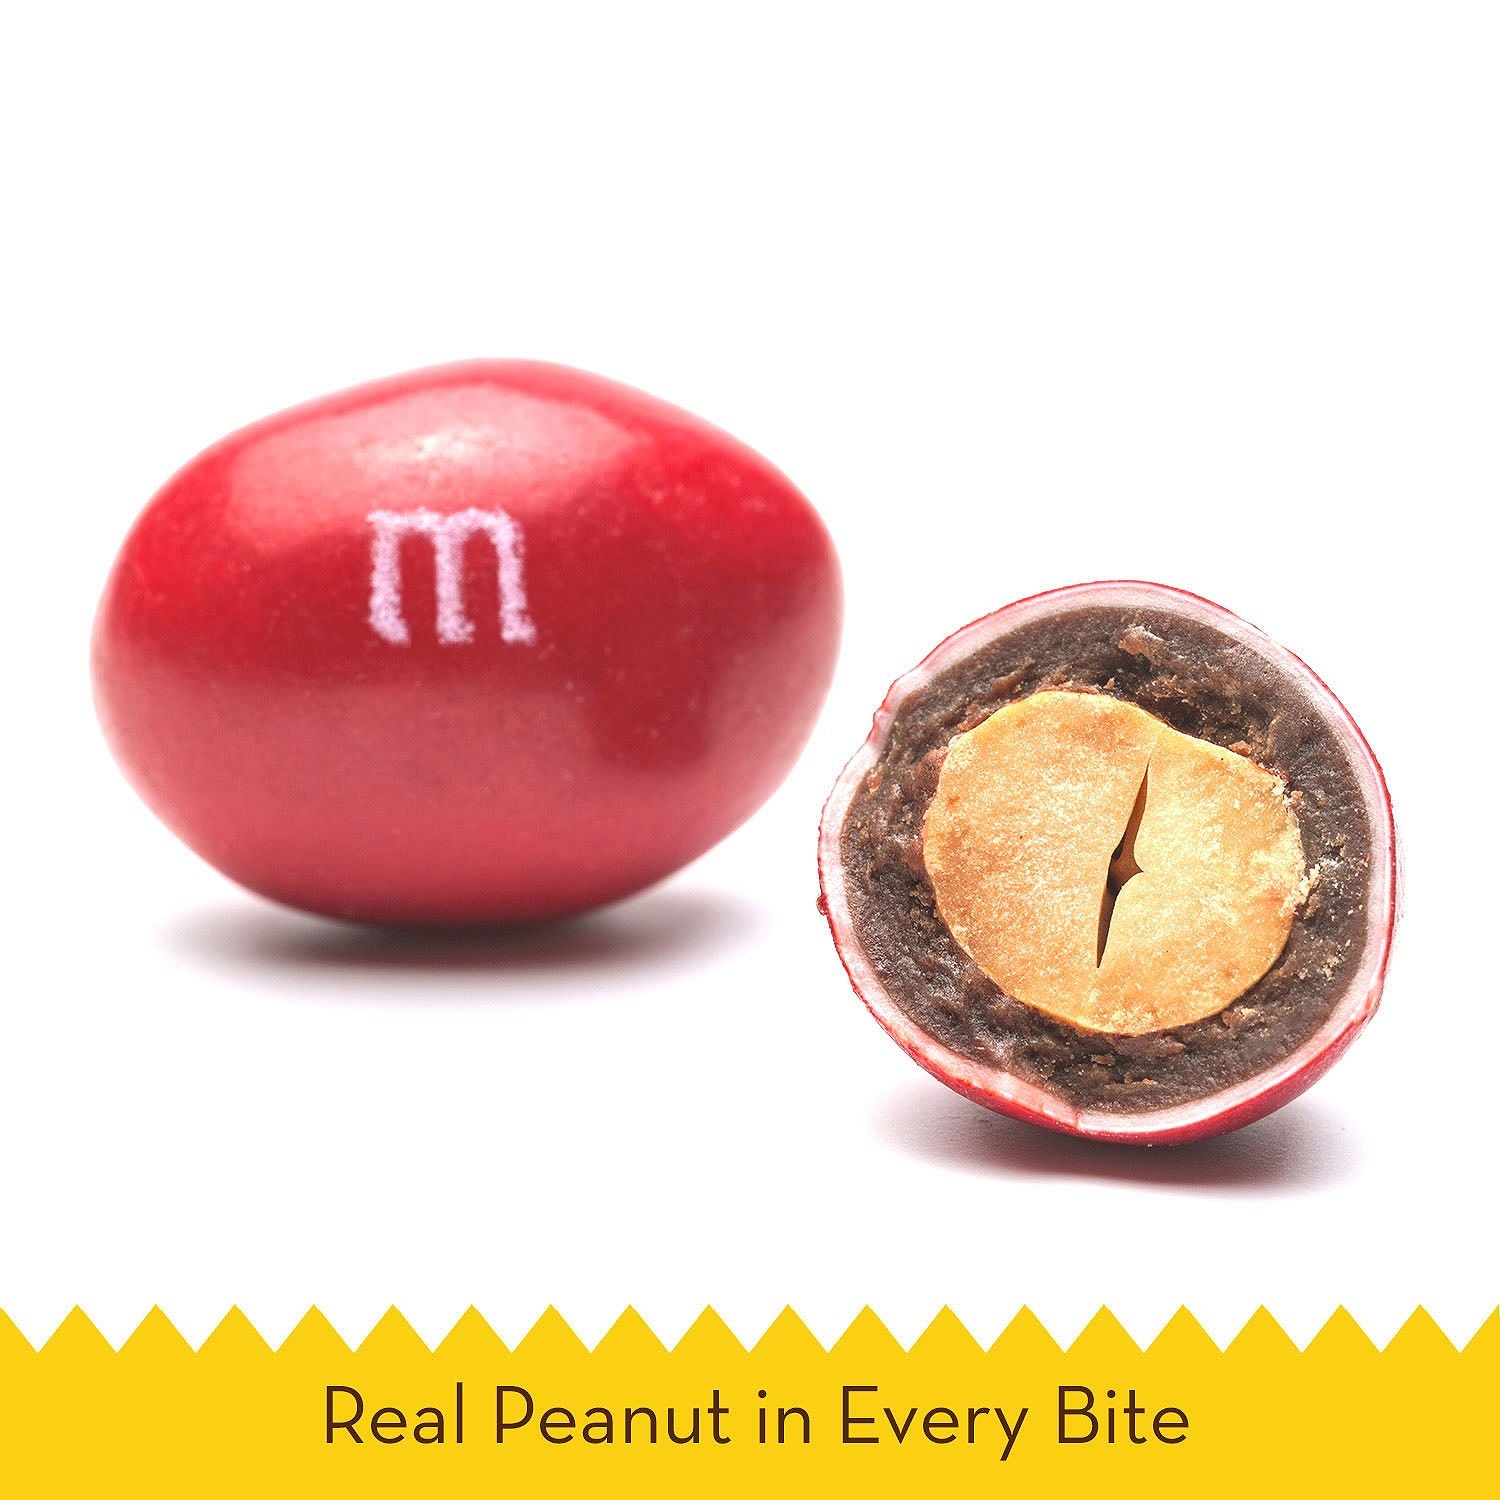 M&M'S Peanut Jar, 62 oz. 